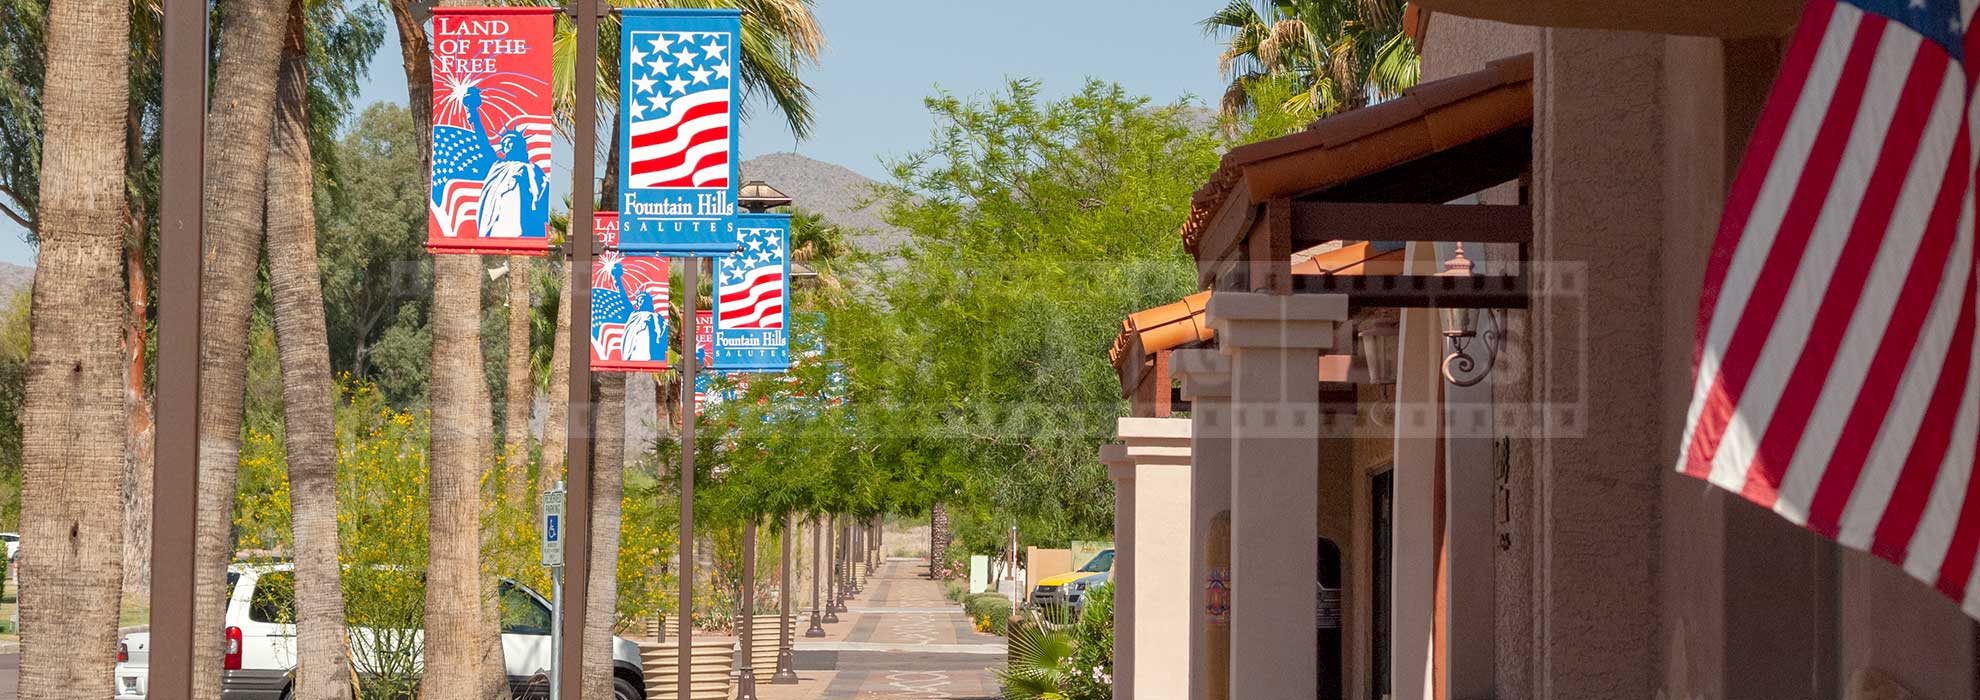 street view in Fountain Hills Arizona